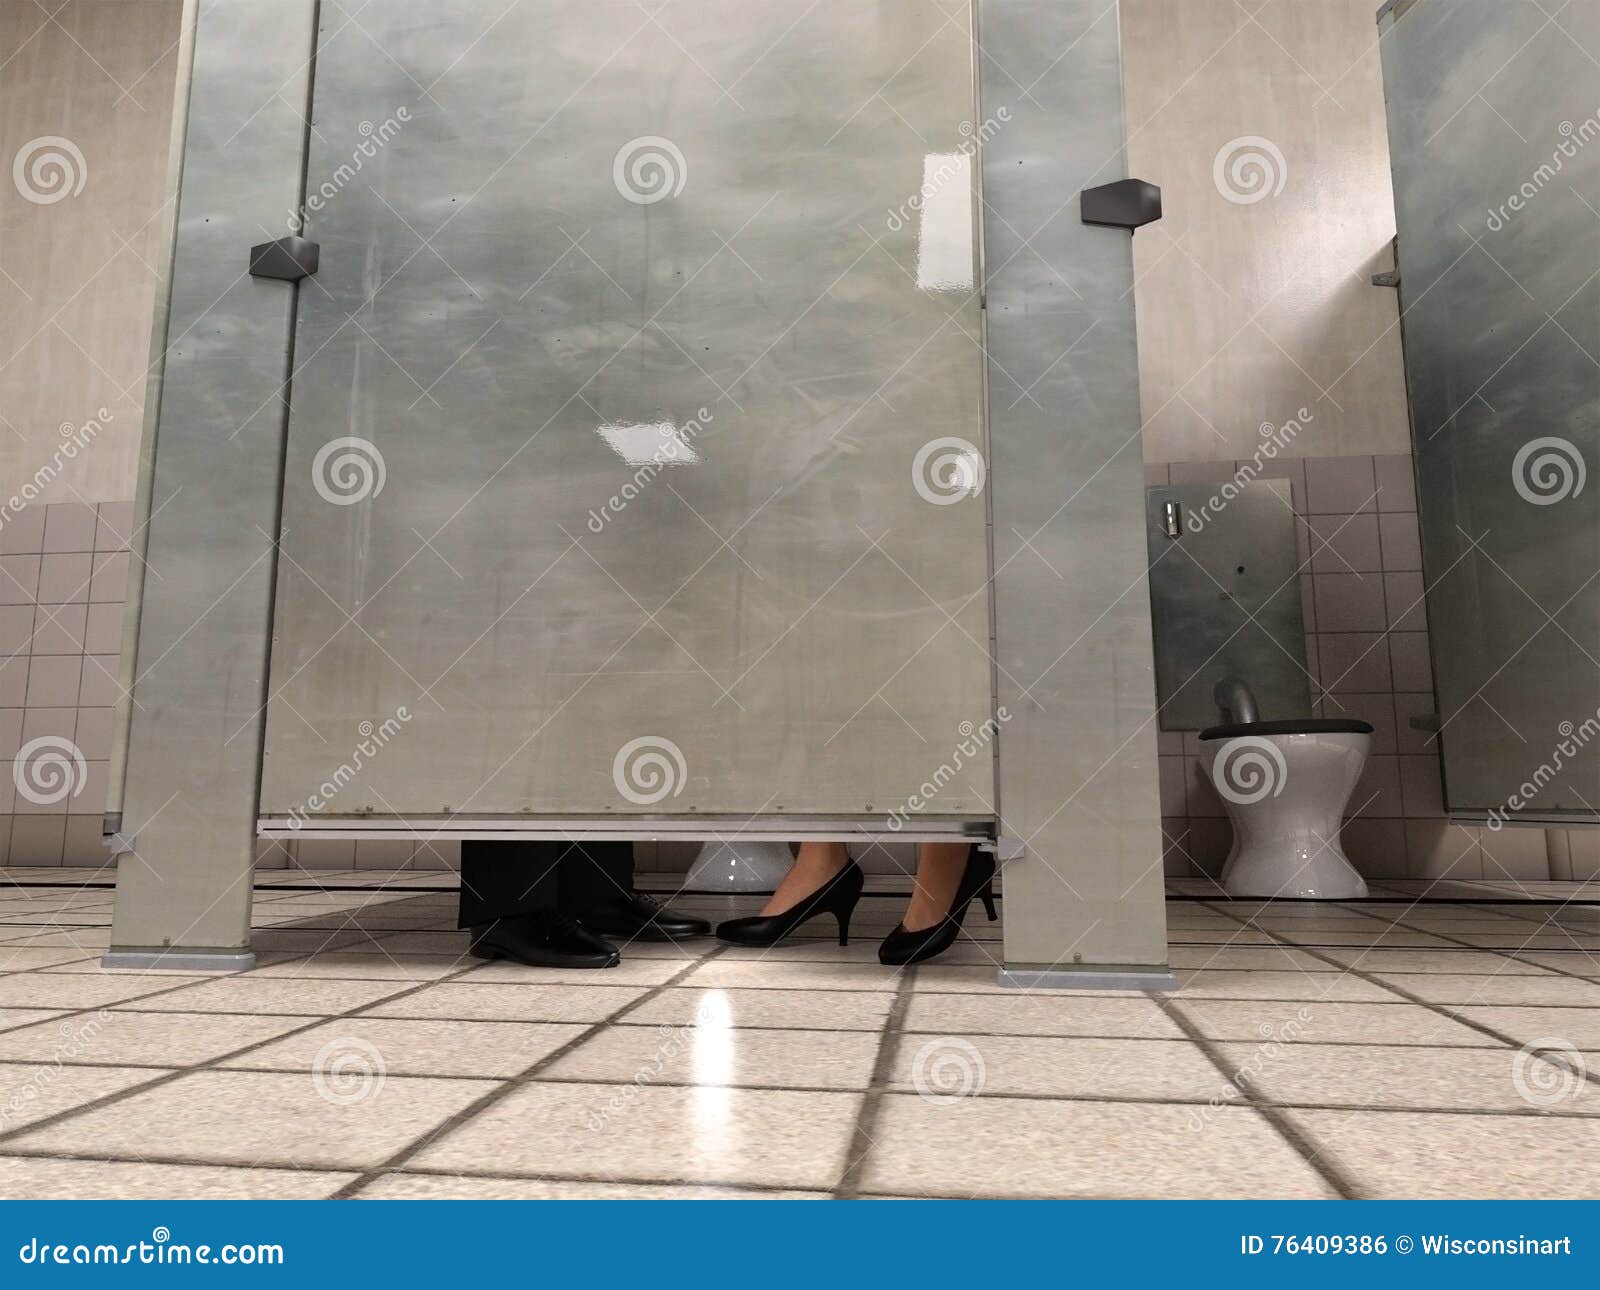 having sex in bathroom stall